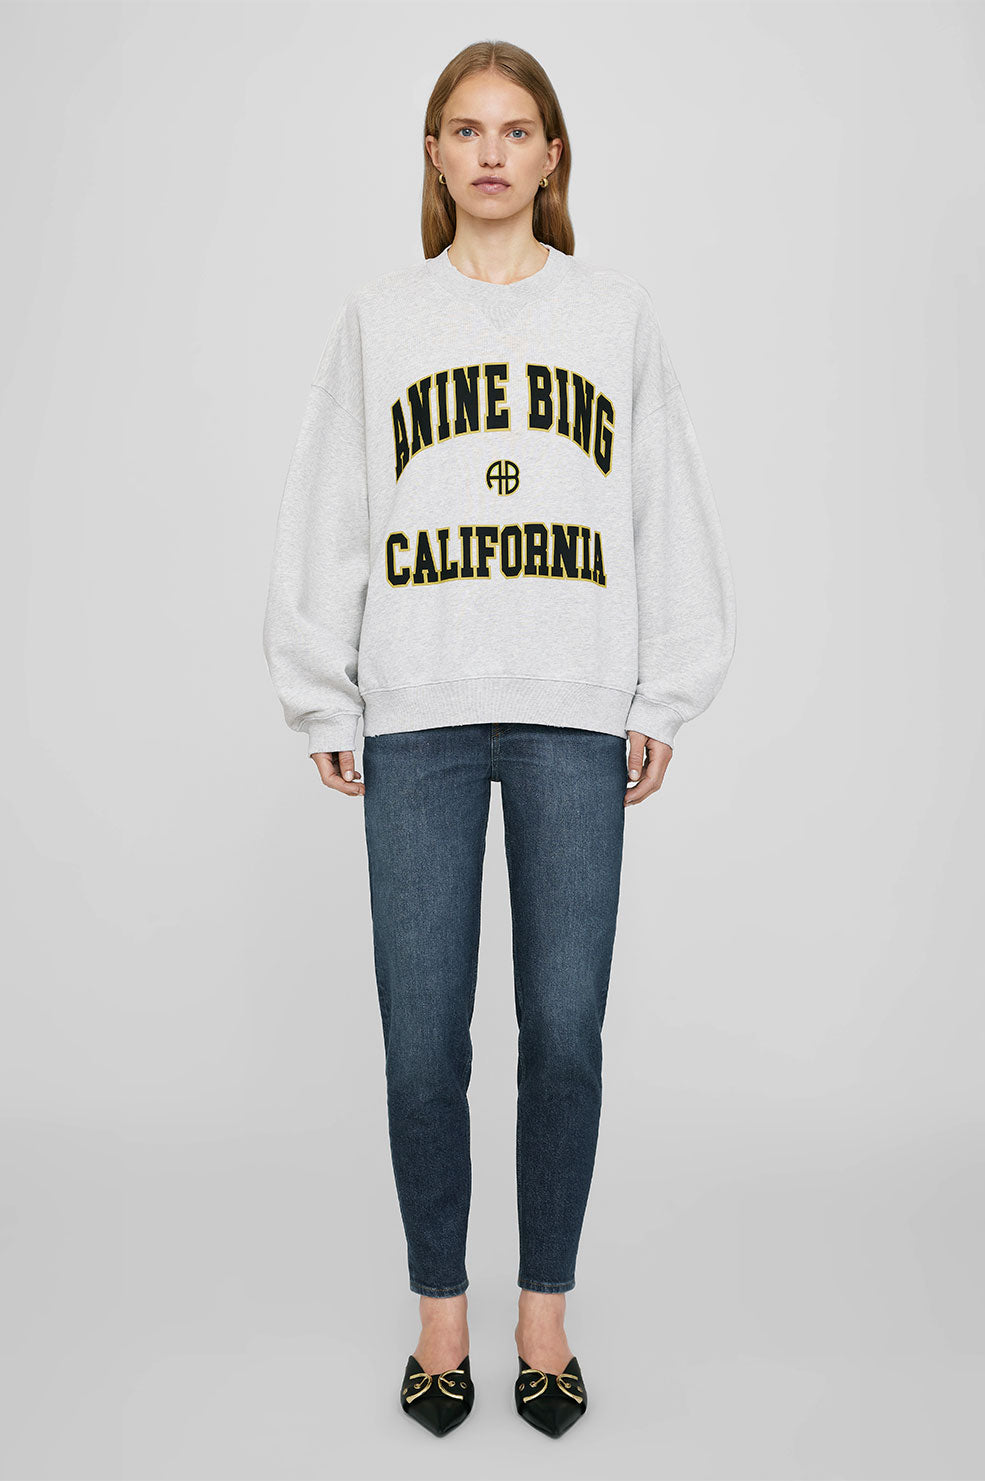 ANINE BING Jaci Sweatshirt Anine Bing California - Heather Grey - Model Front 